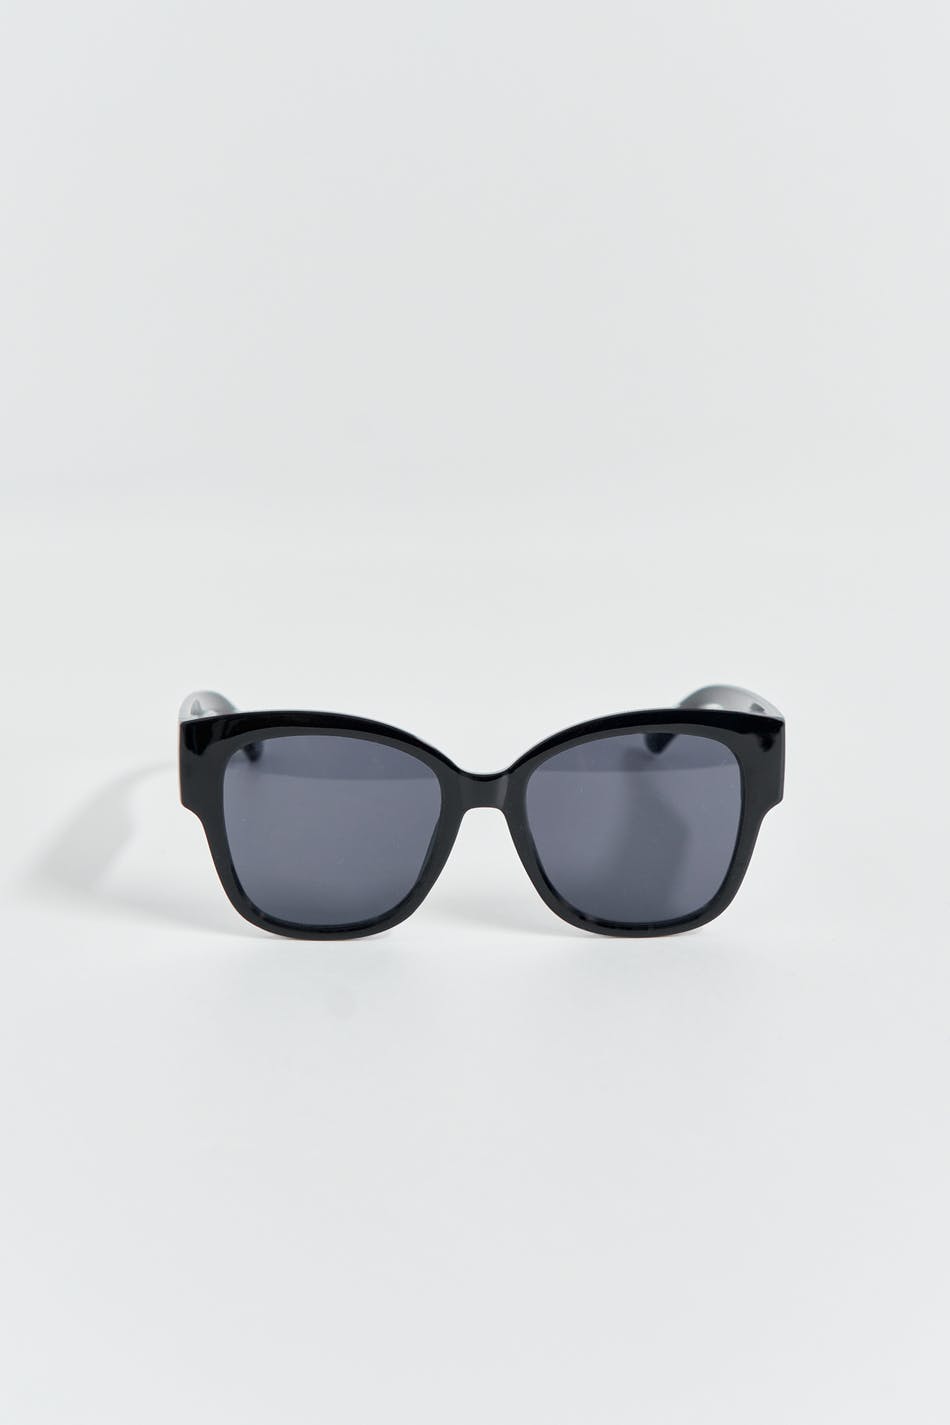  Gina Tricot- Oversized sunglasses - Sonnenbrillen- Black - ONESIZE- Female